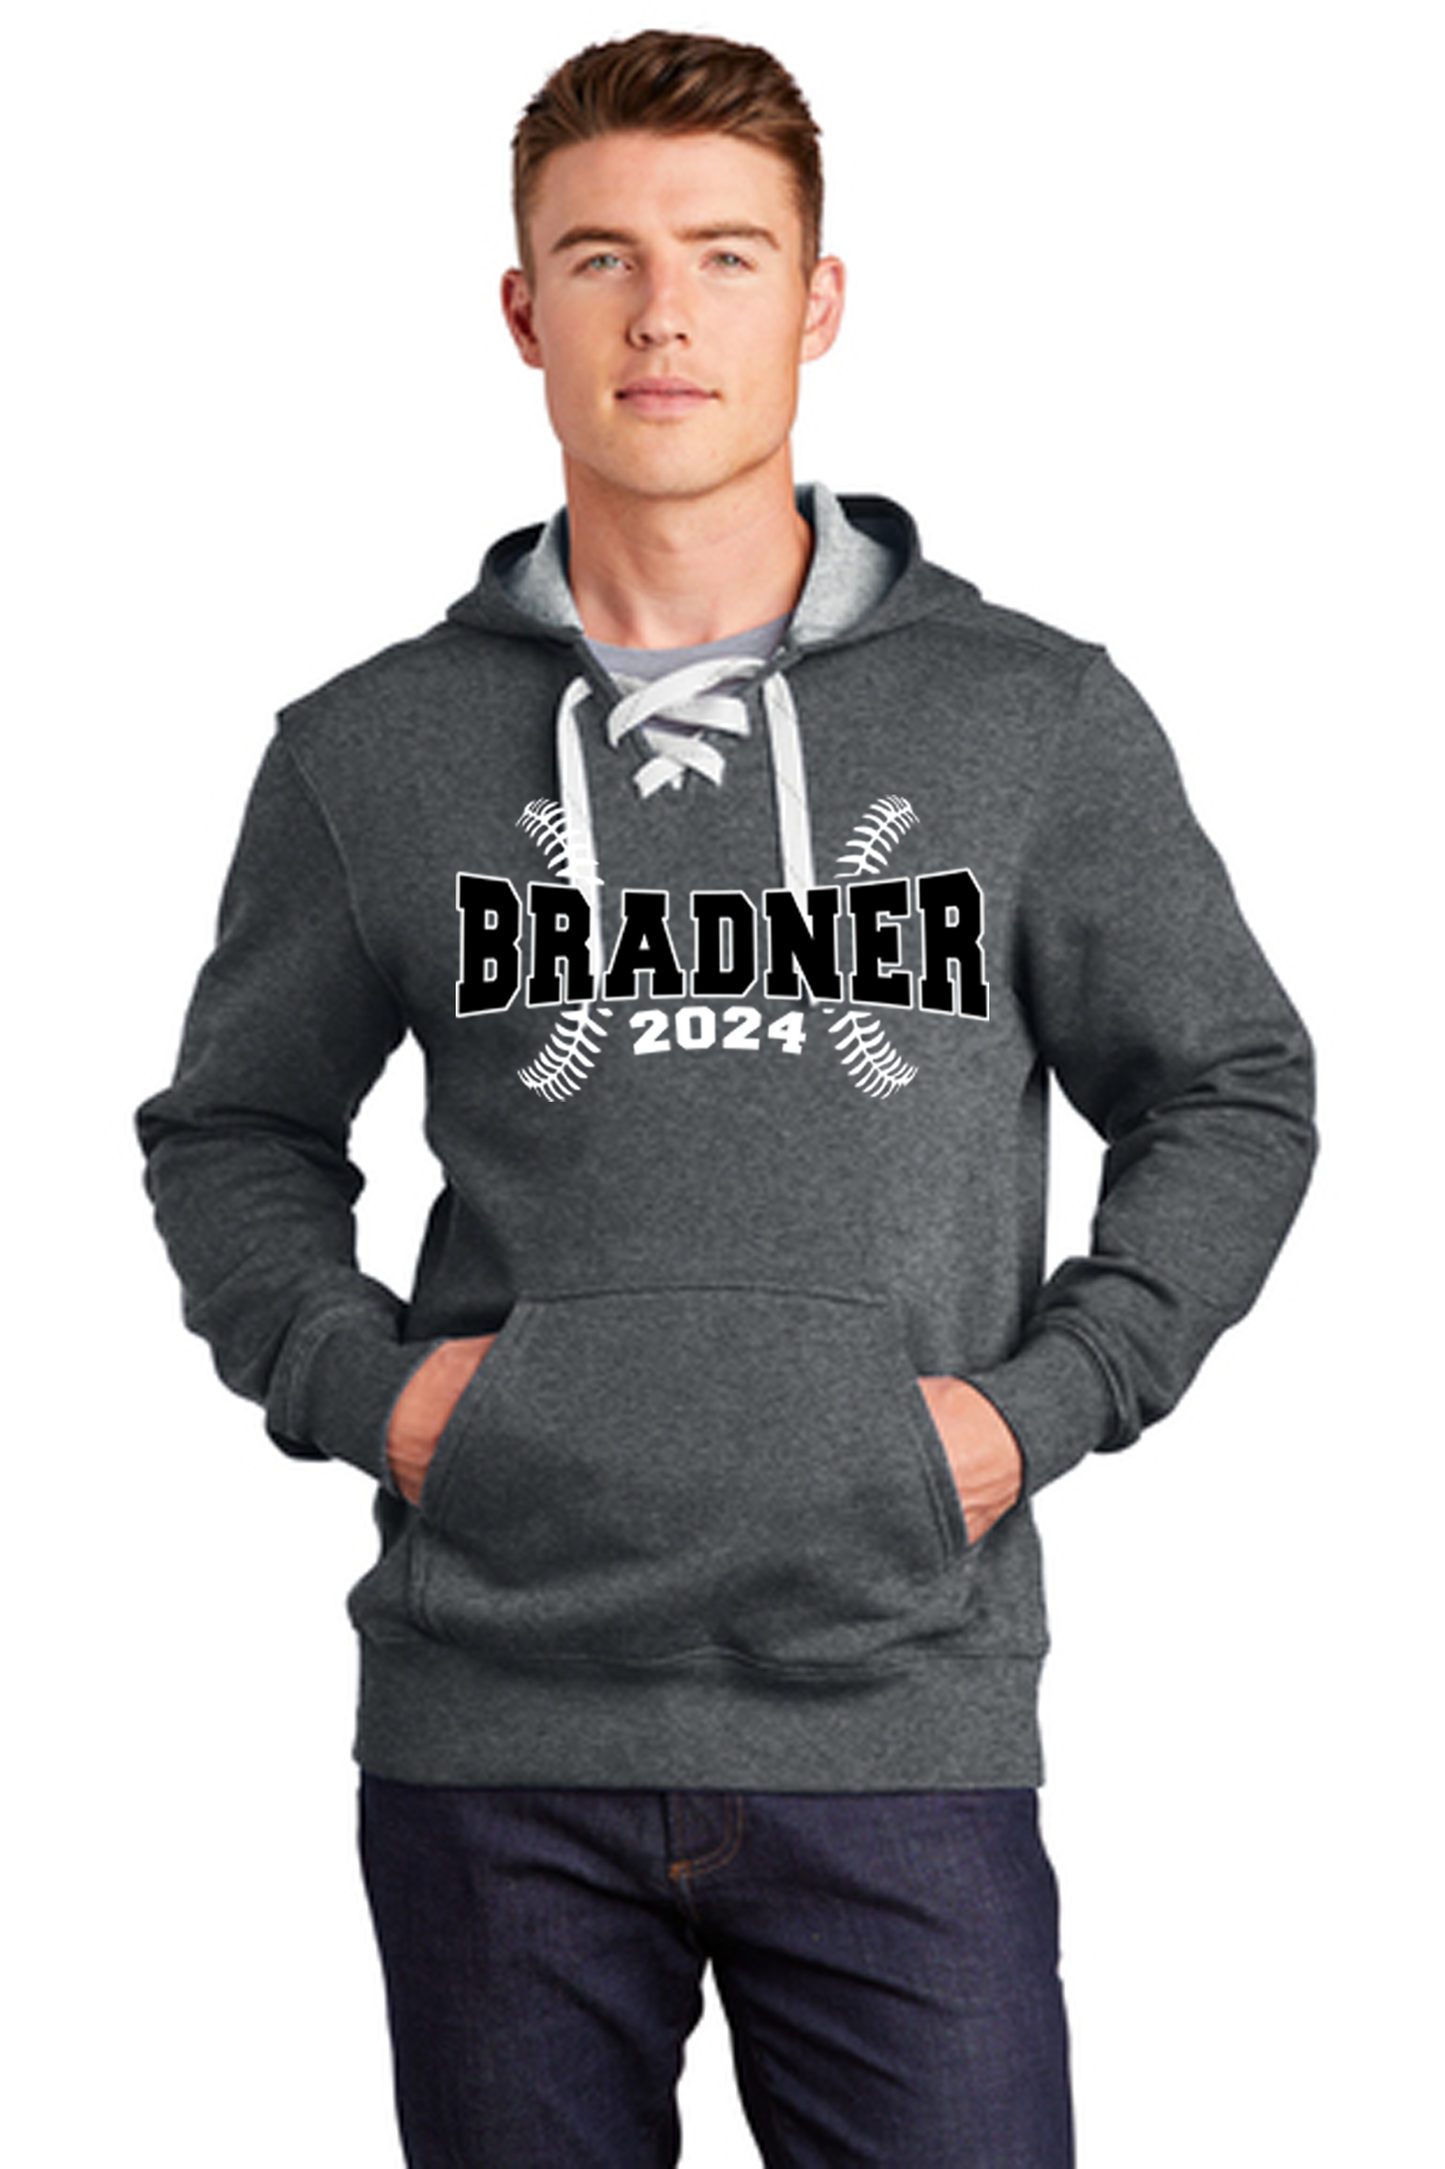 Bradner Lace Up Hooded Sweatshirt